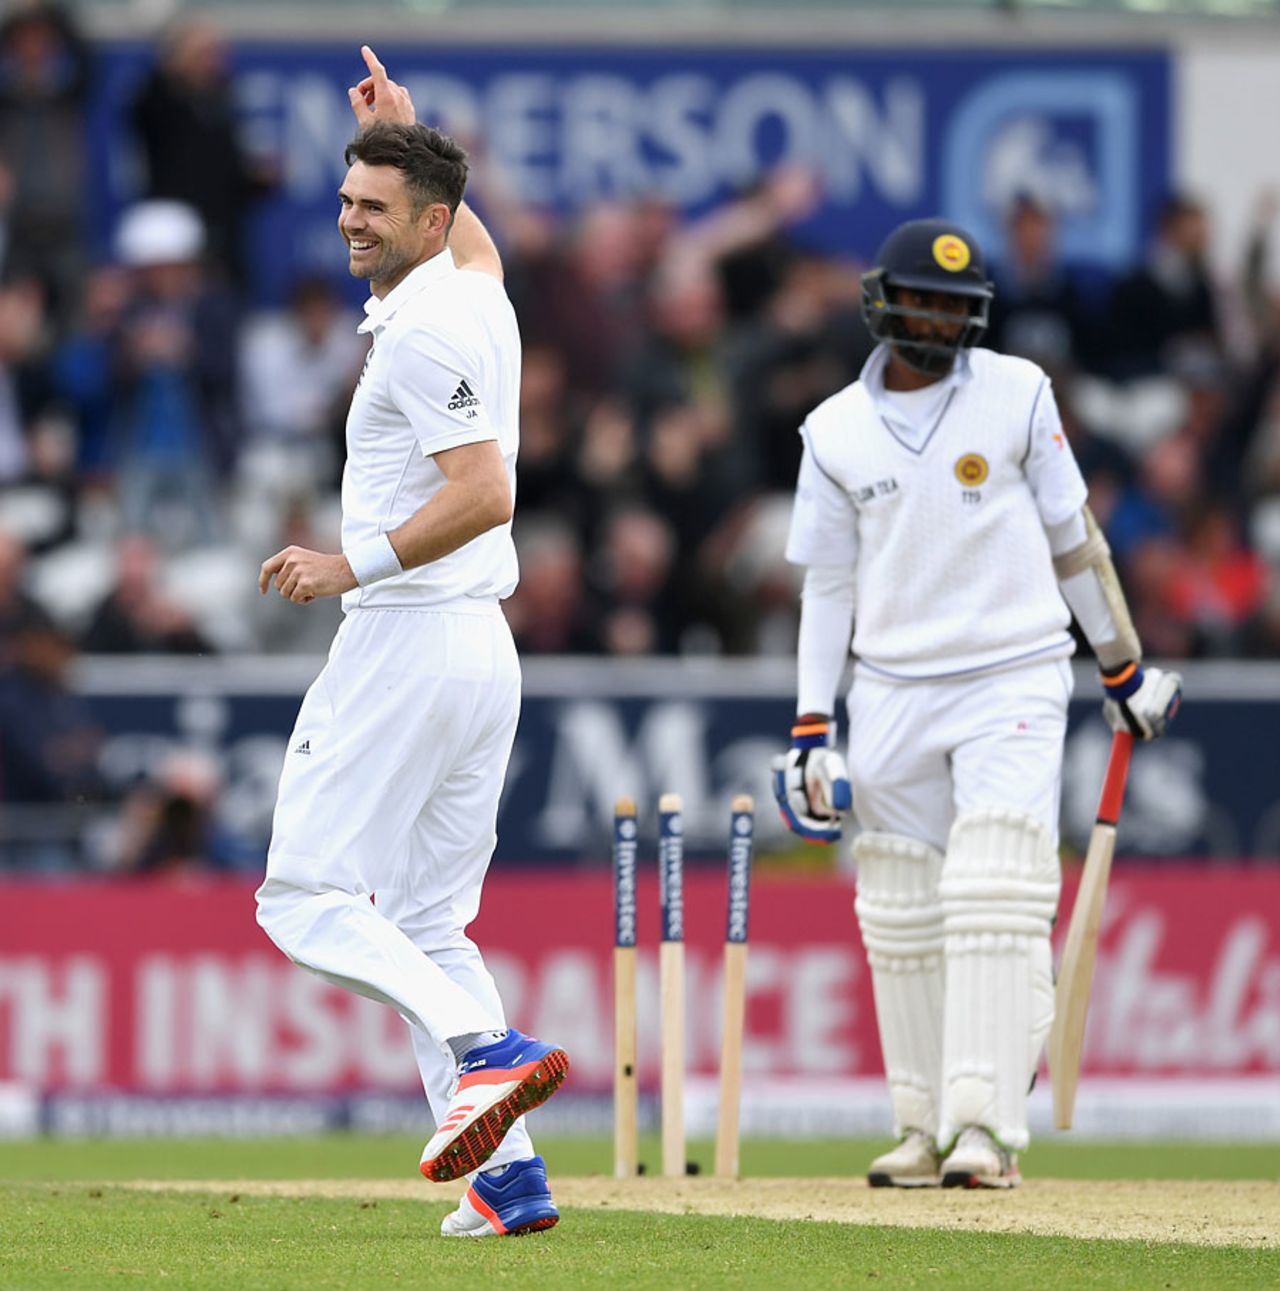 James Anderson sealed victory by bowling Nuwan Pradeep, England v Sri Lanka, 1st Test, Headingley, 3rd day, May 21, 2016